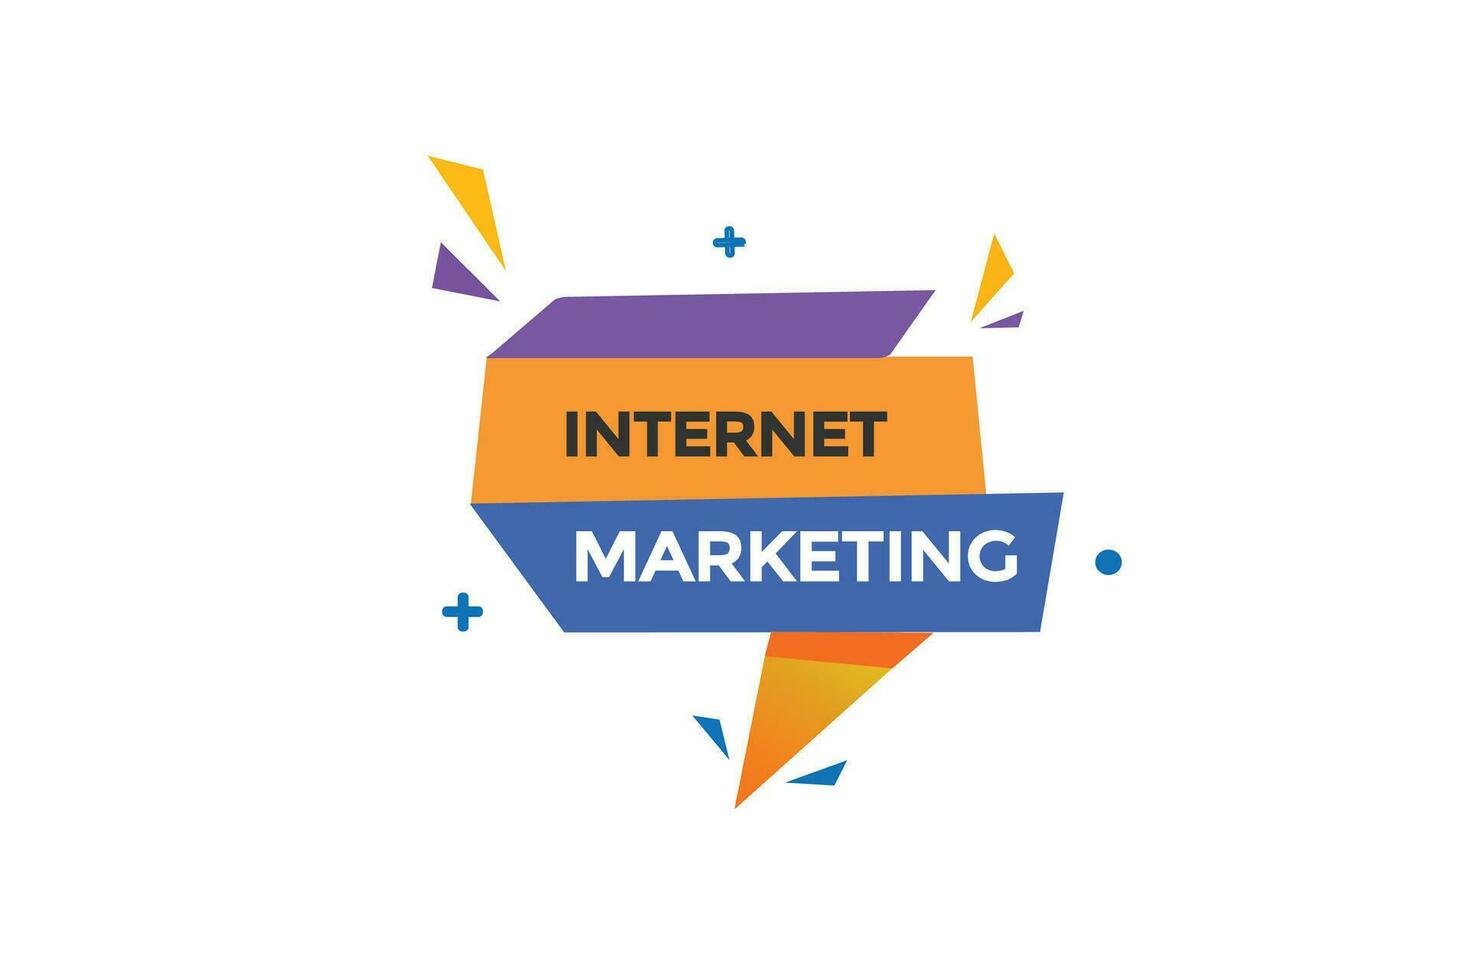 nuevo Internet márketing moderno, sitio web, hacer clic botón, nivel, firmar, discurso, burbuja bandera, vector